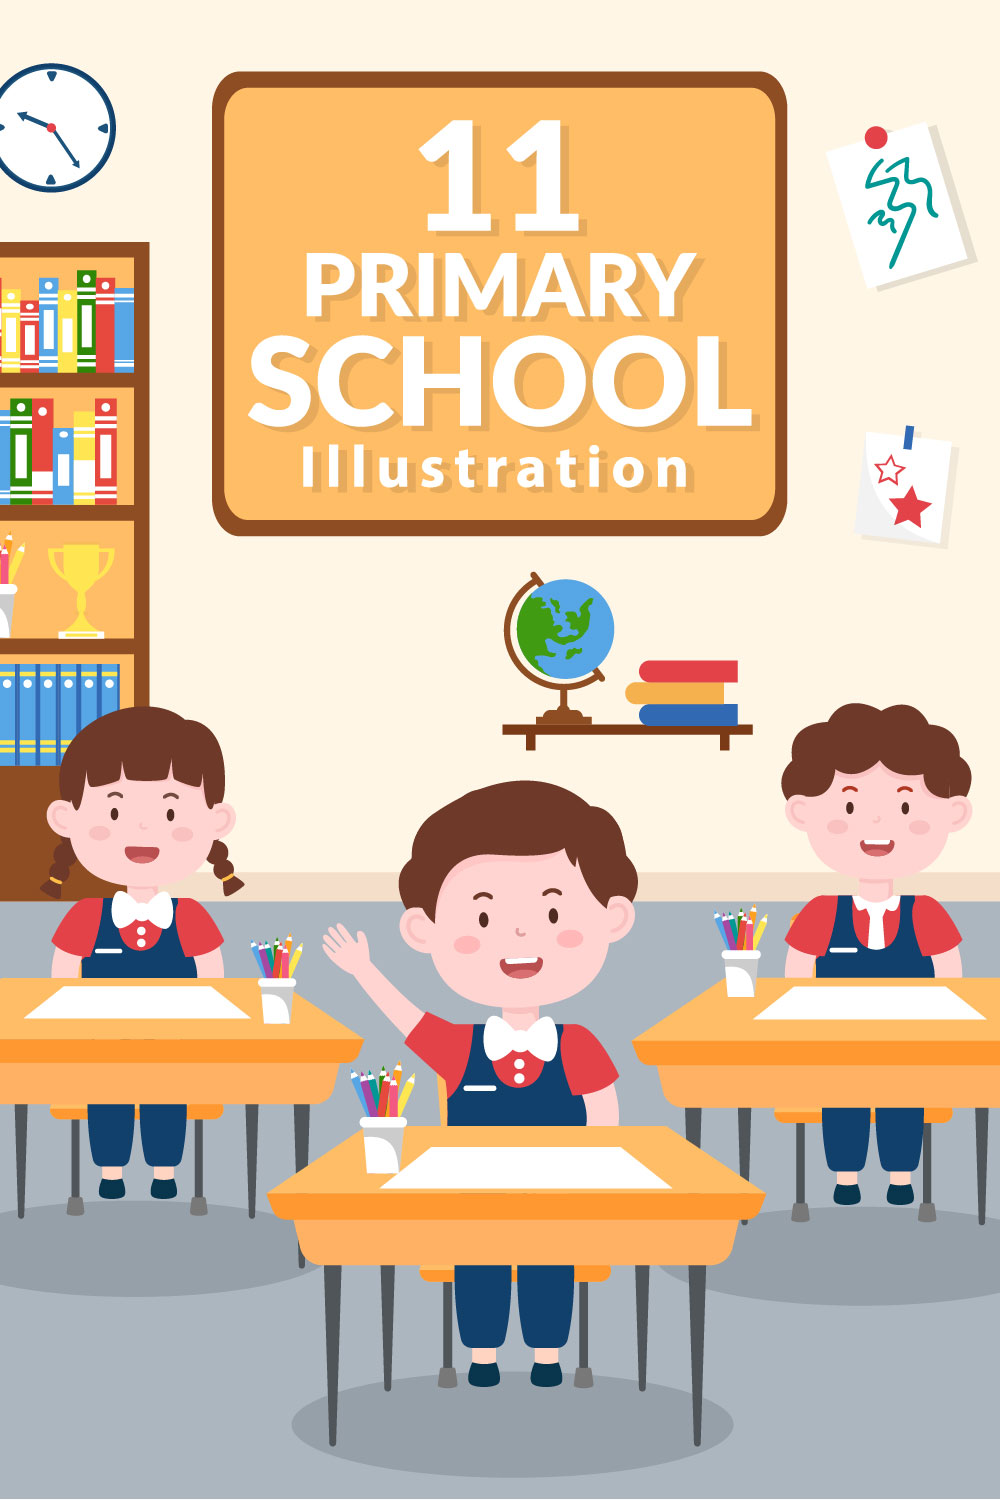 11 Primary School Illustration pinterest image.